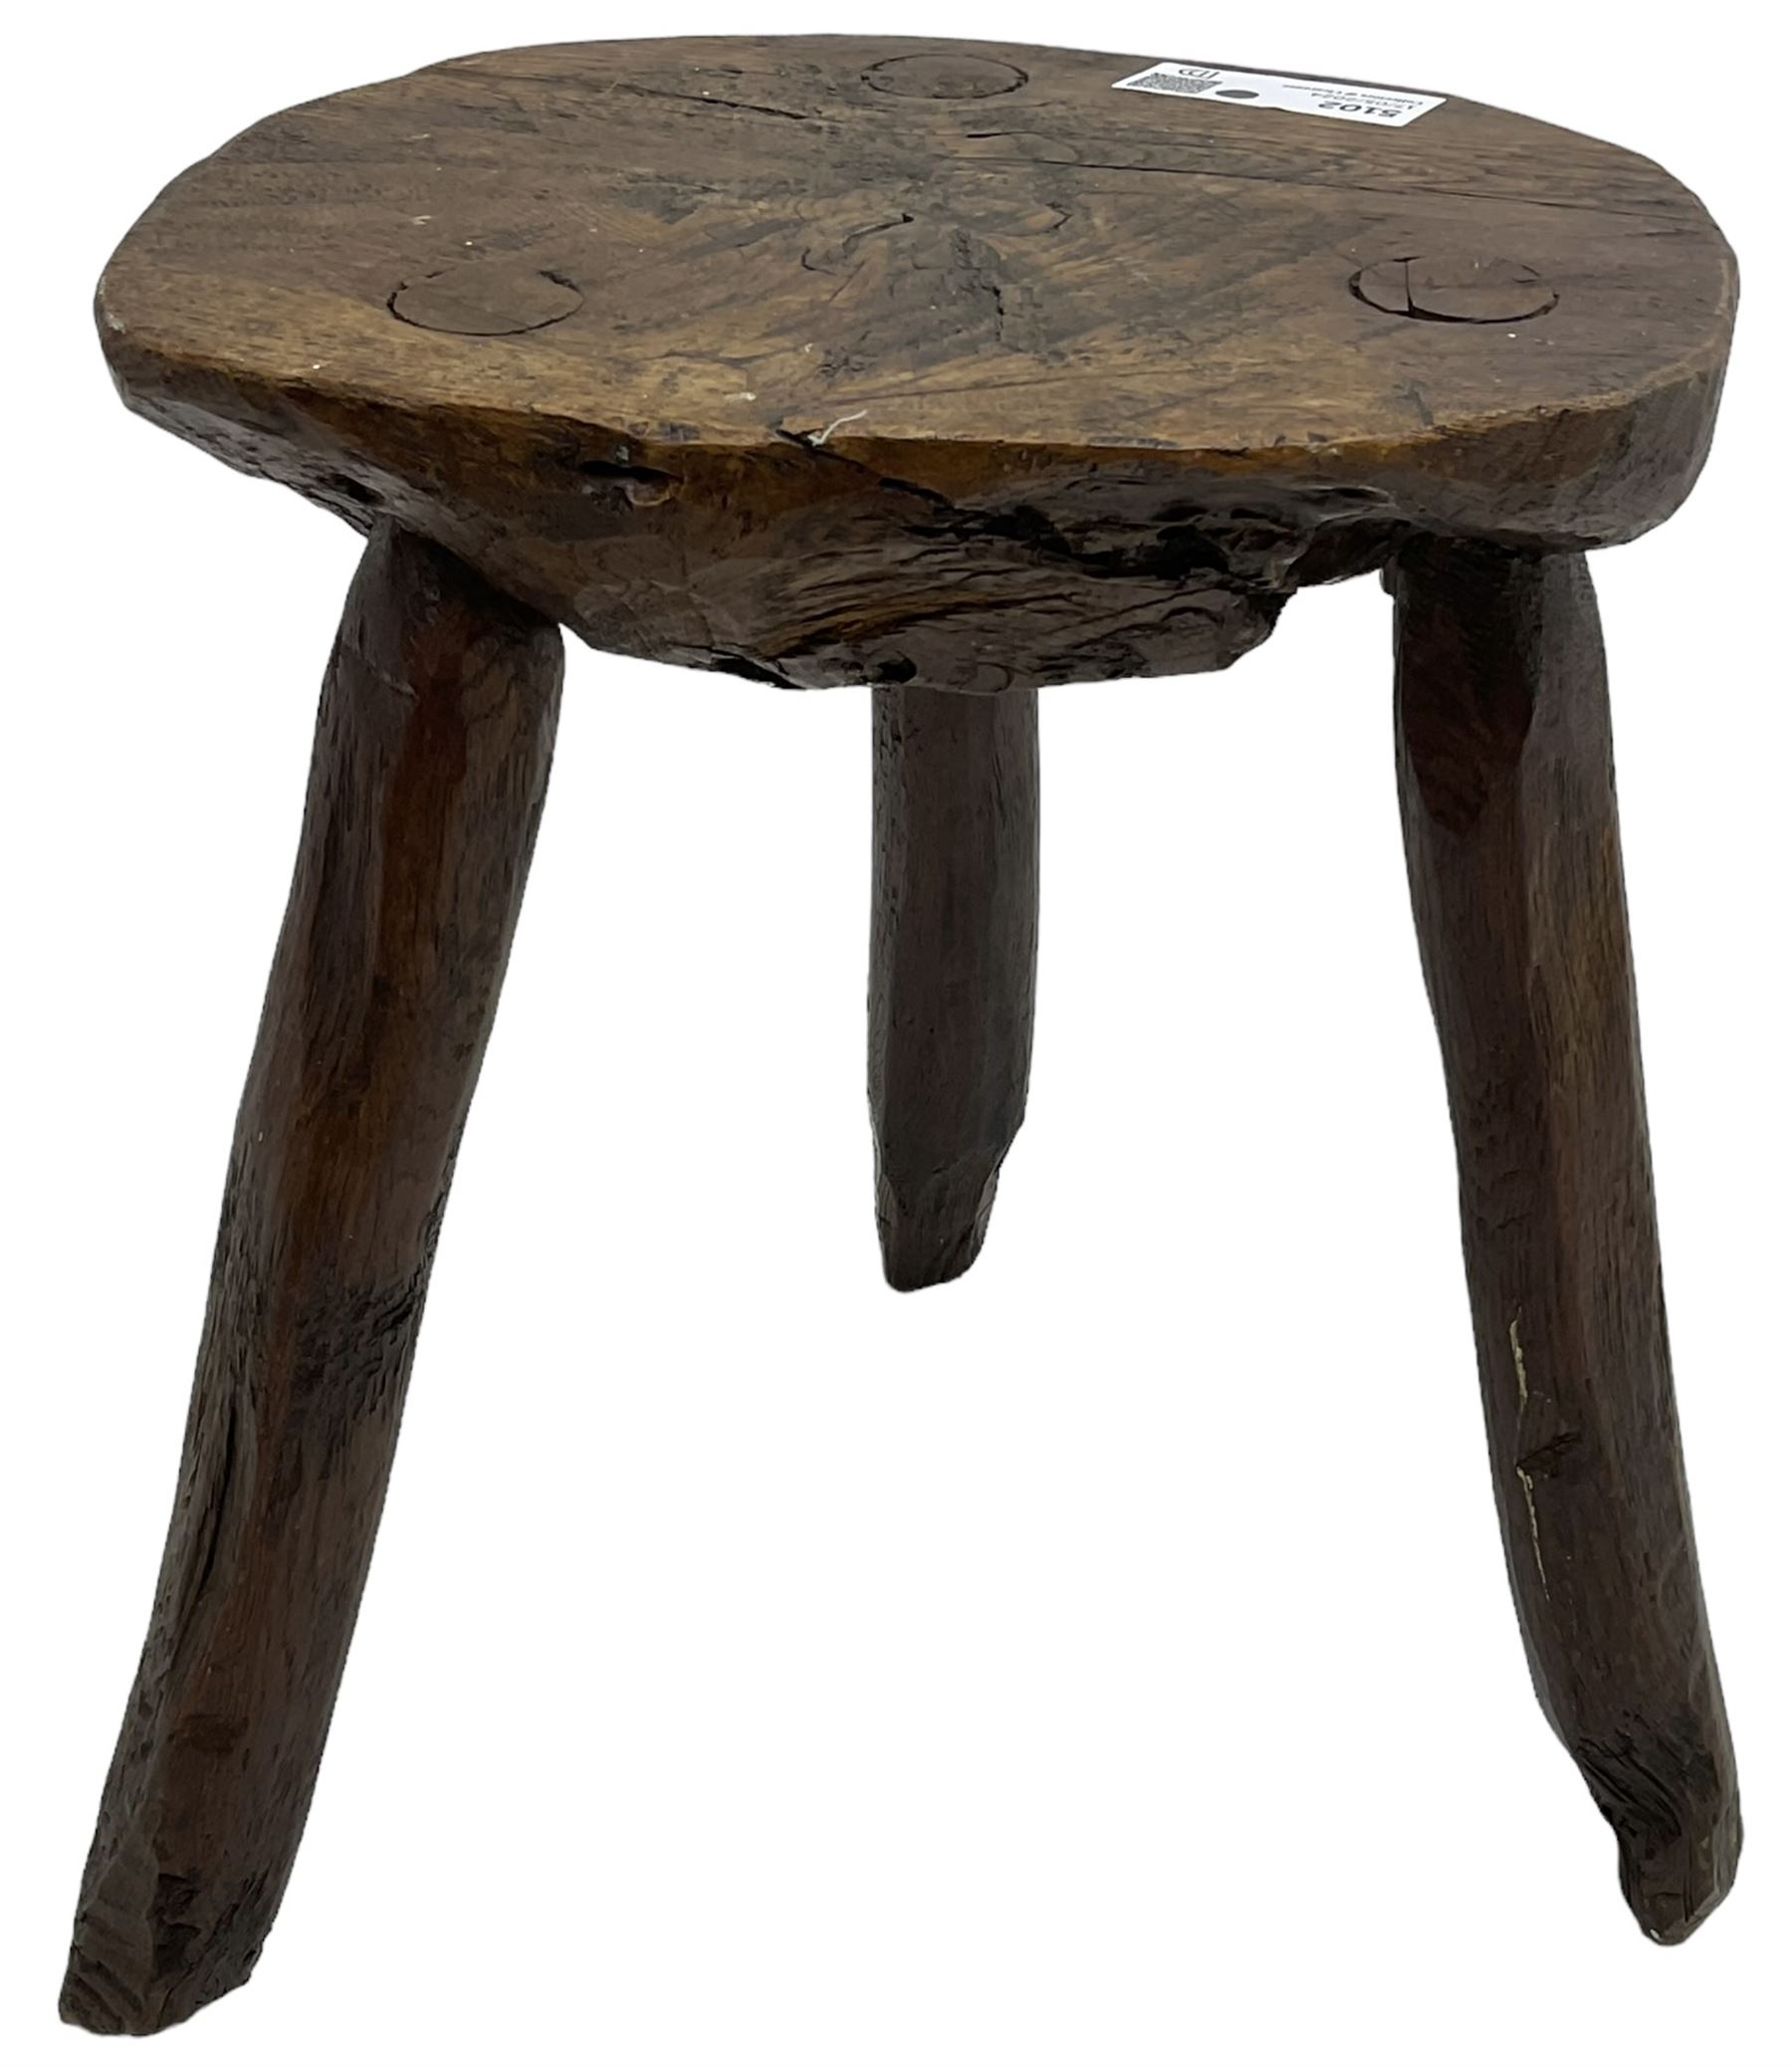 Rustic oak three-legged stool - Image 2 of 5